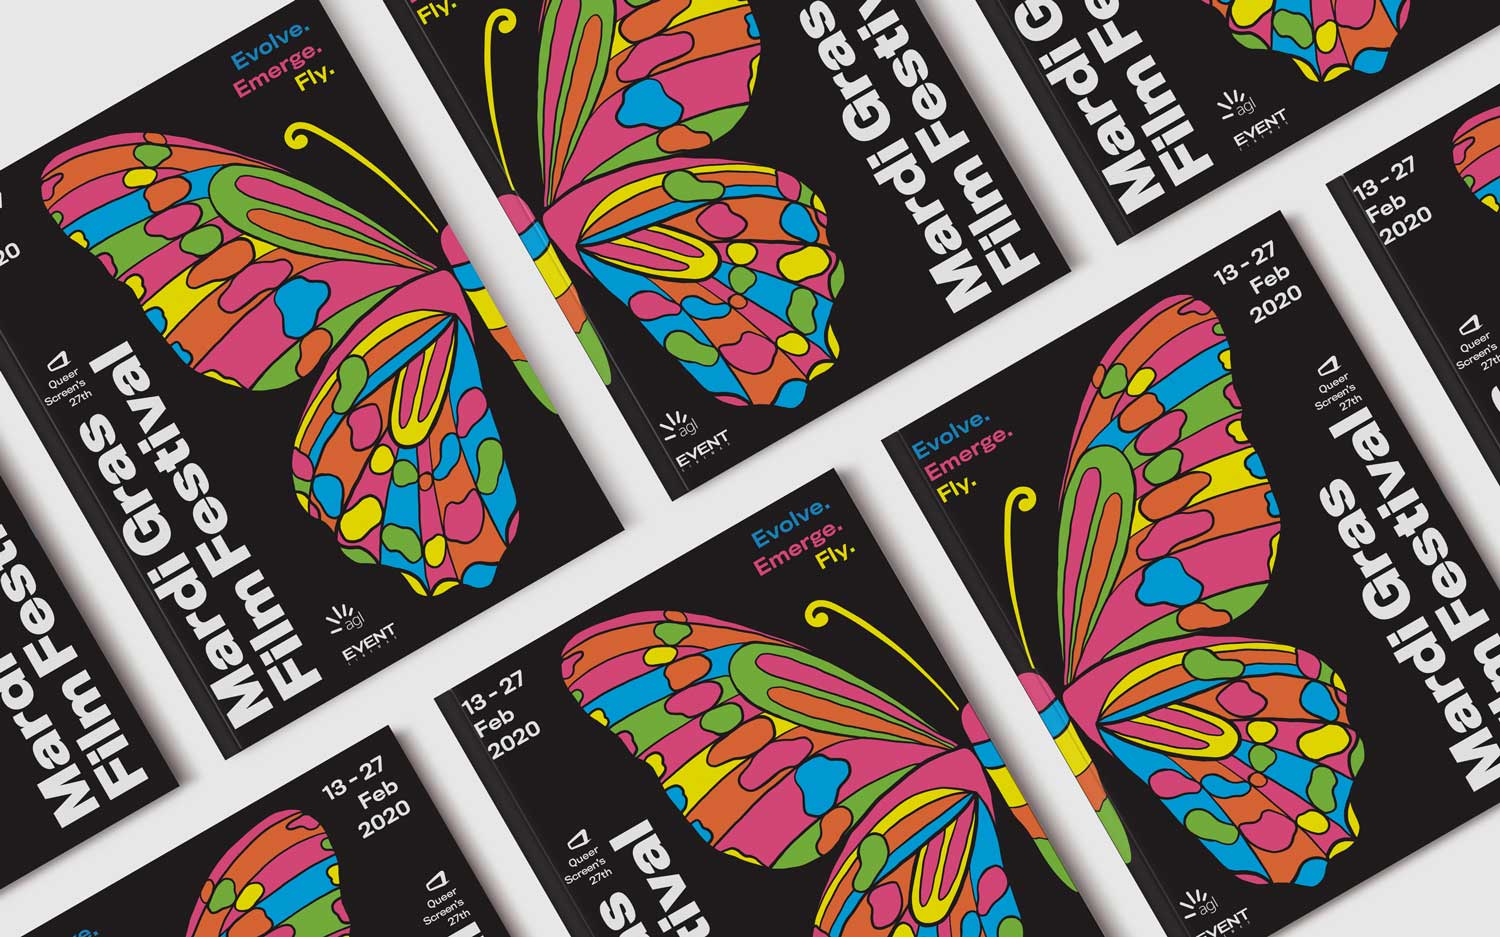 Butterfly covers Mardi Gras Film Festival 2020